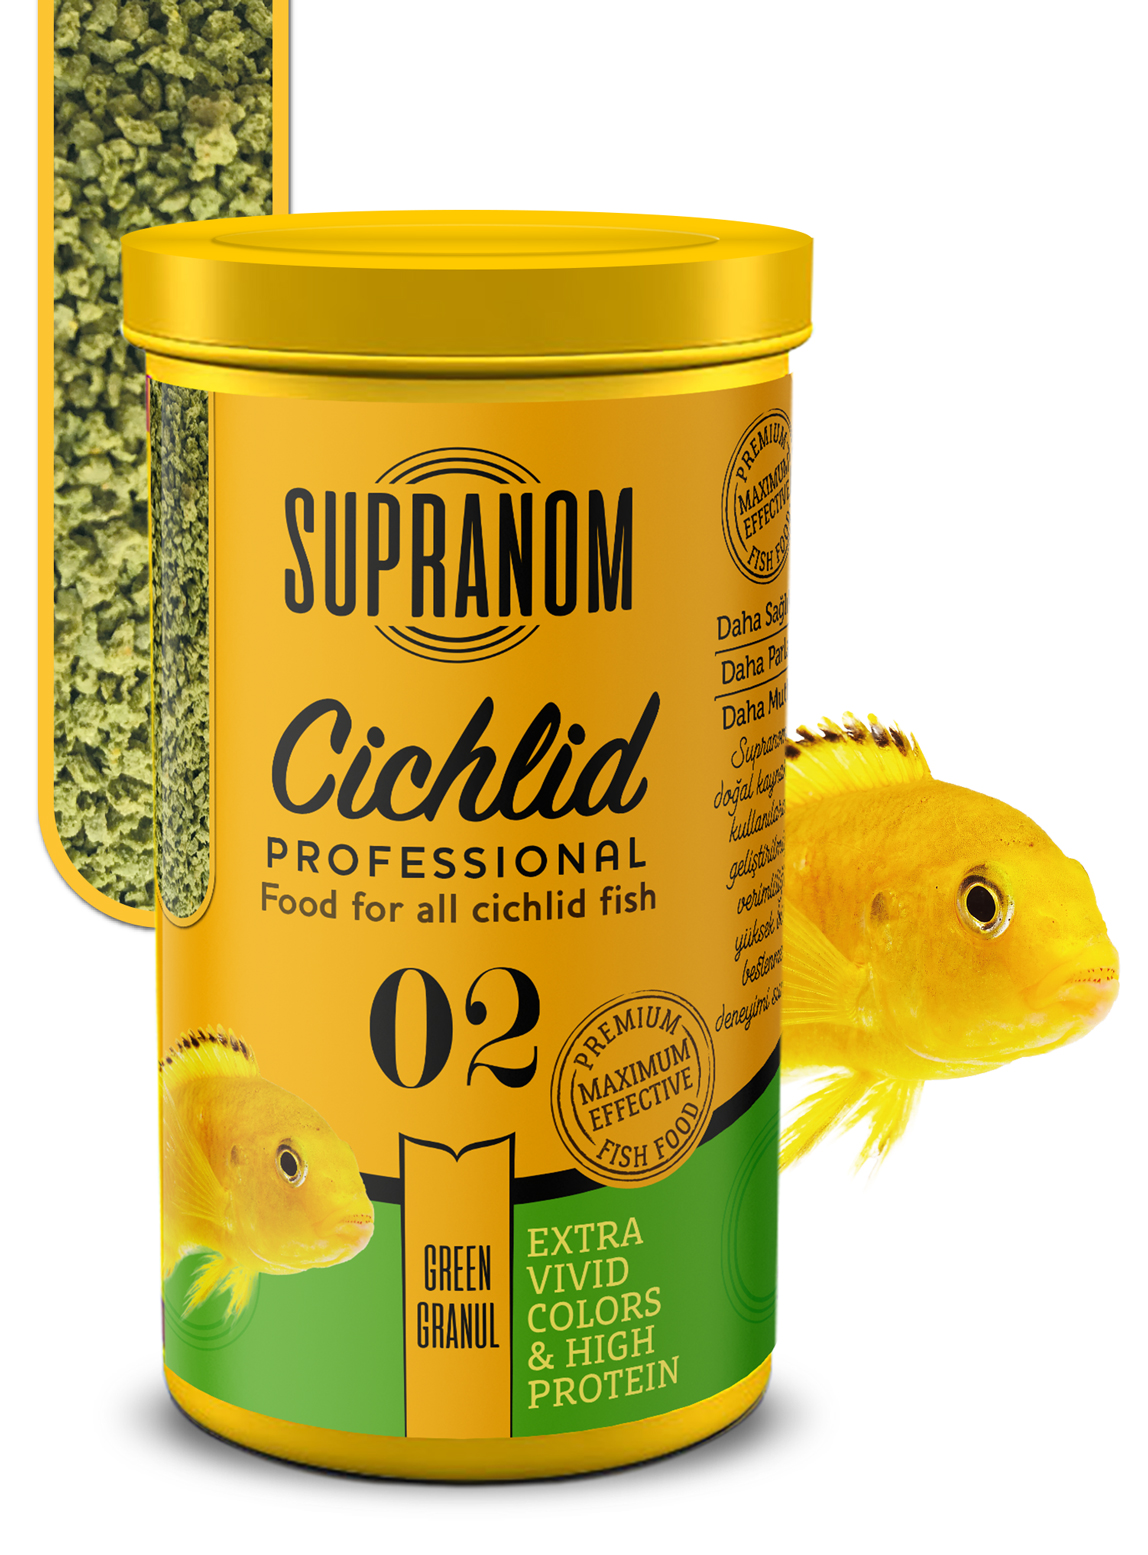 Supranom cichlid balık yemi green granul 250ml (02)-1